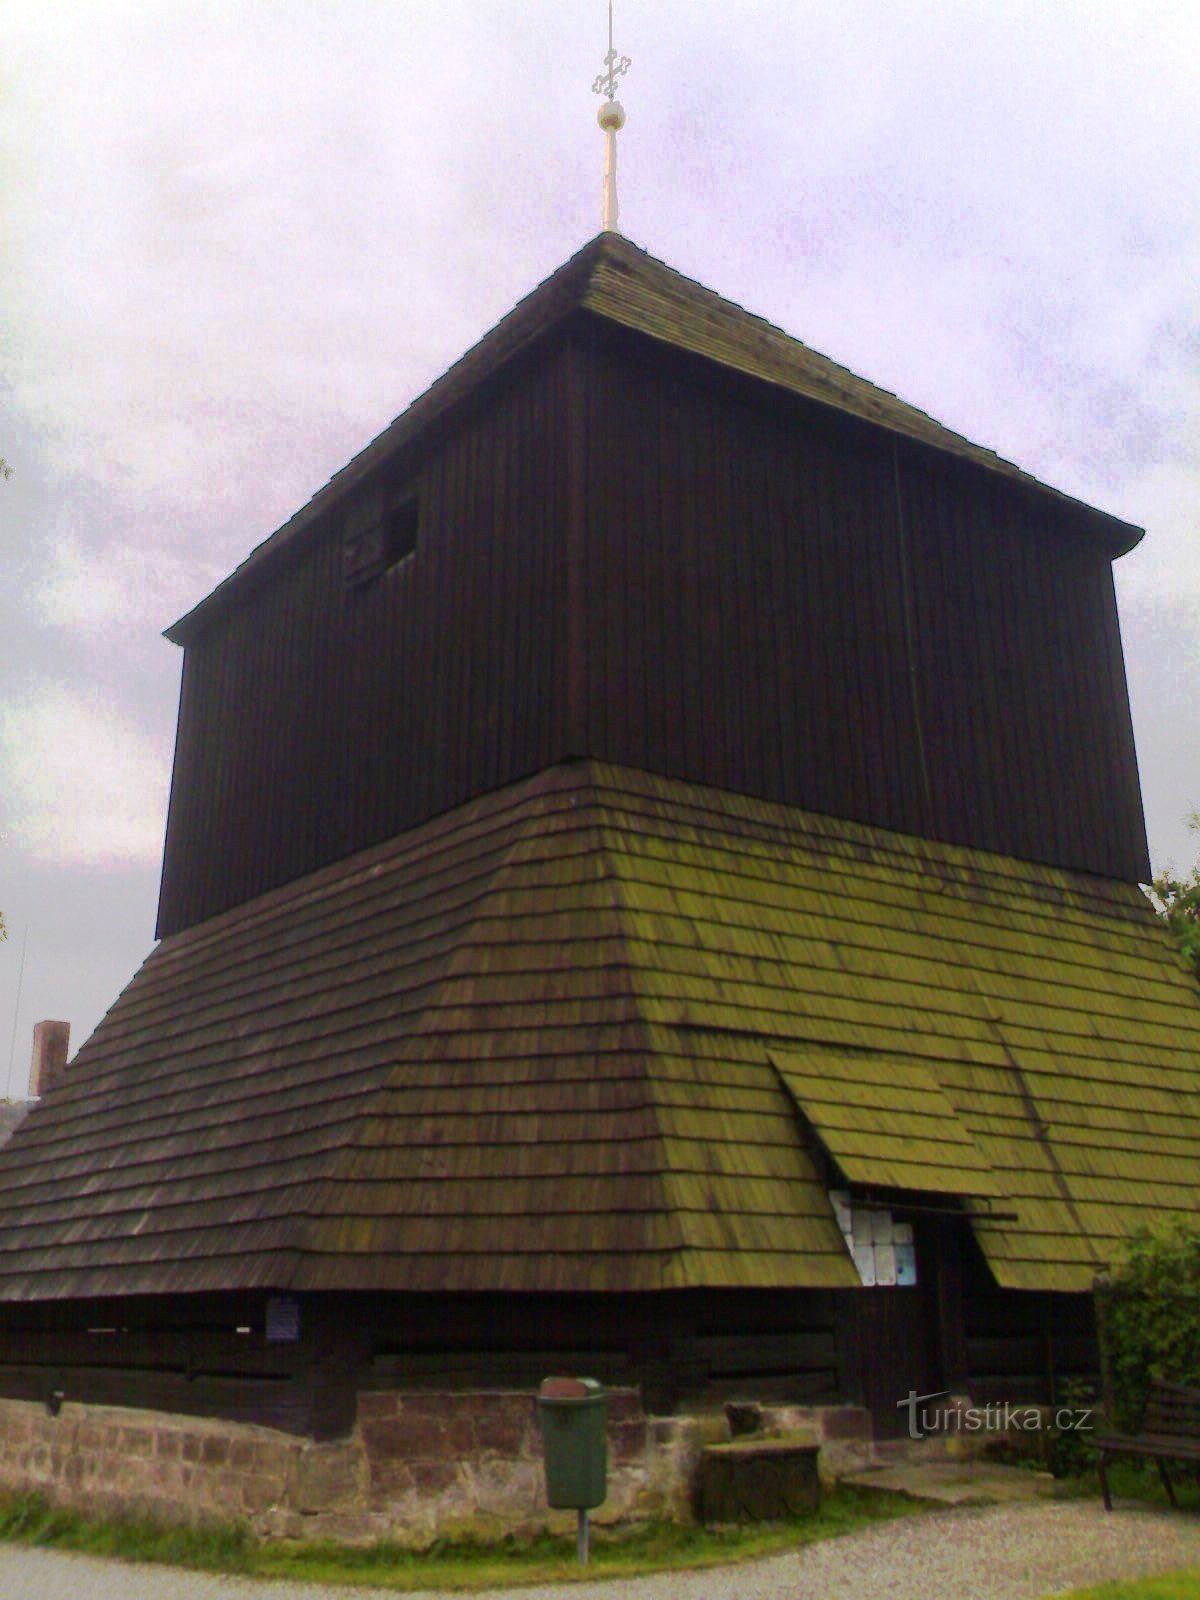 Rovensko pod Troskami - clocher en bois